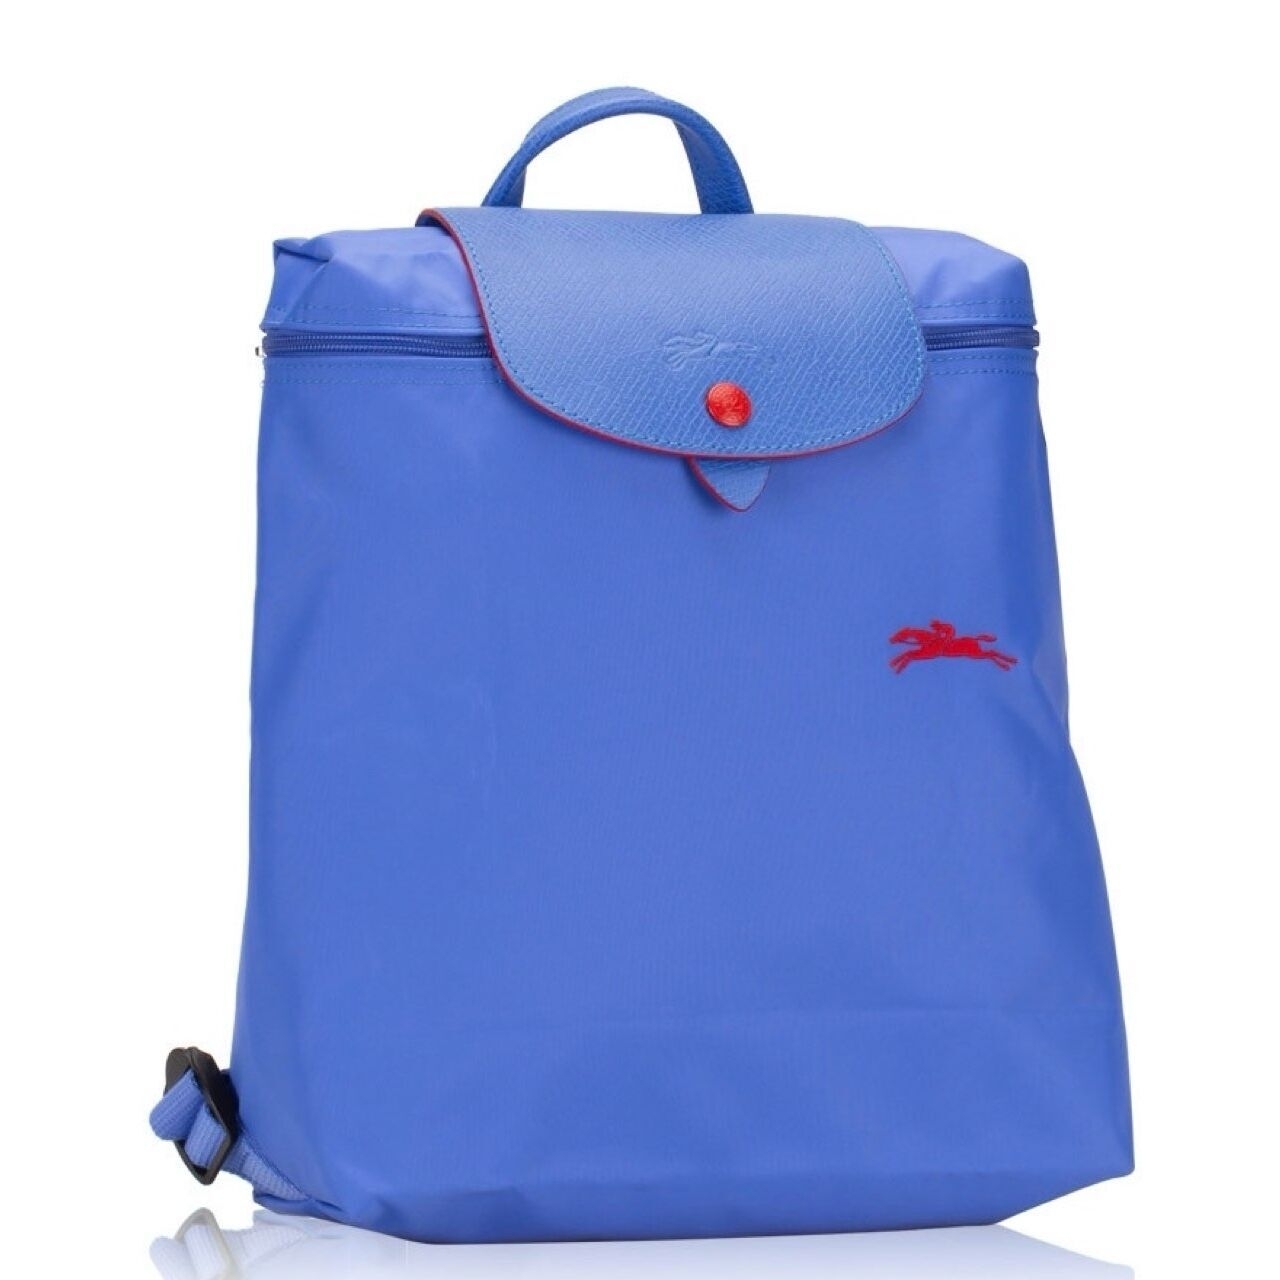 Longchamp Sac a Dos Backpack in Myosotis